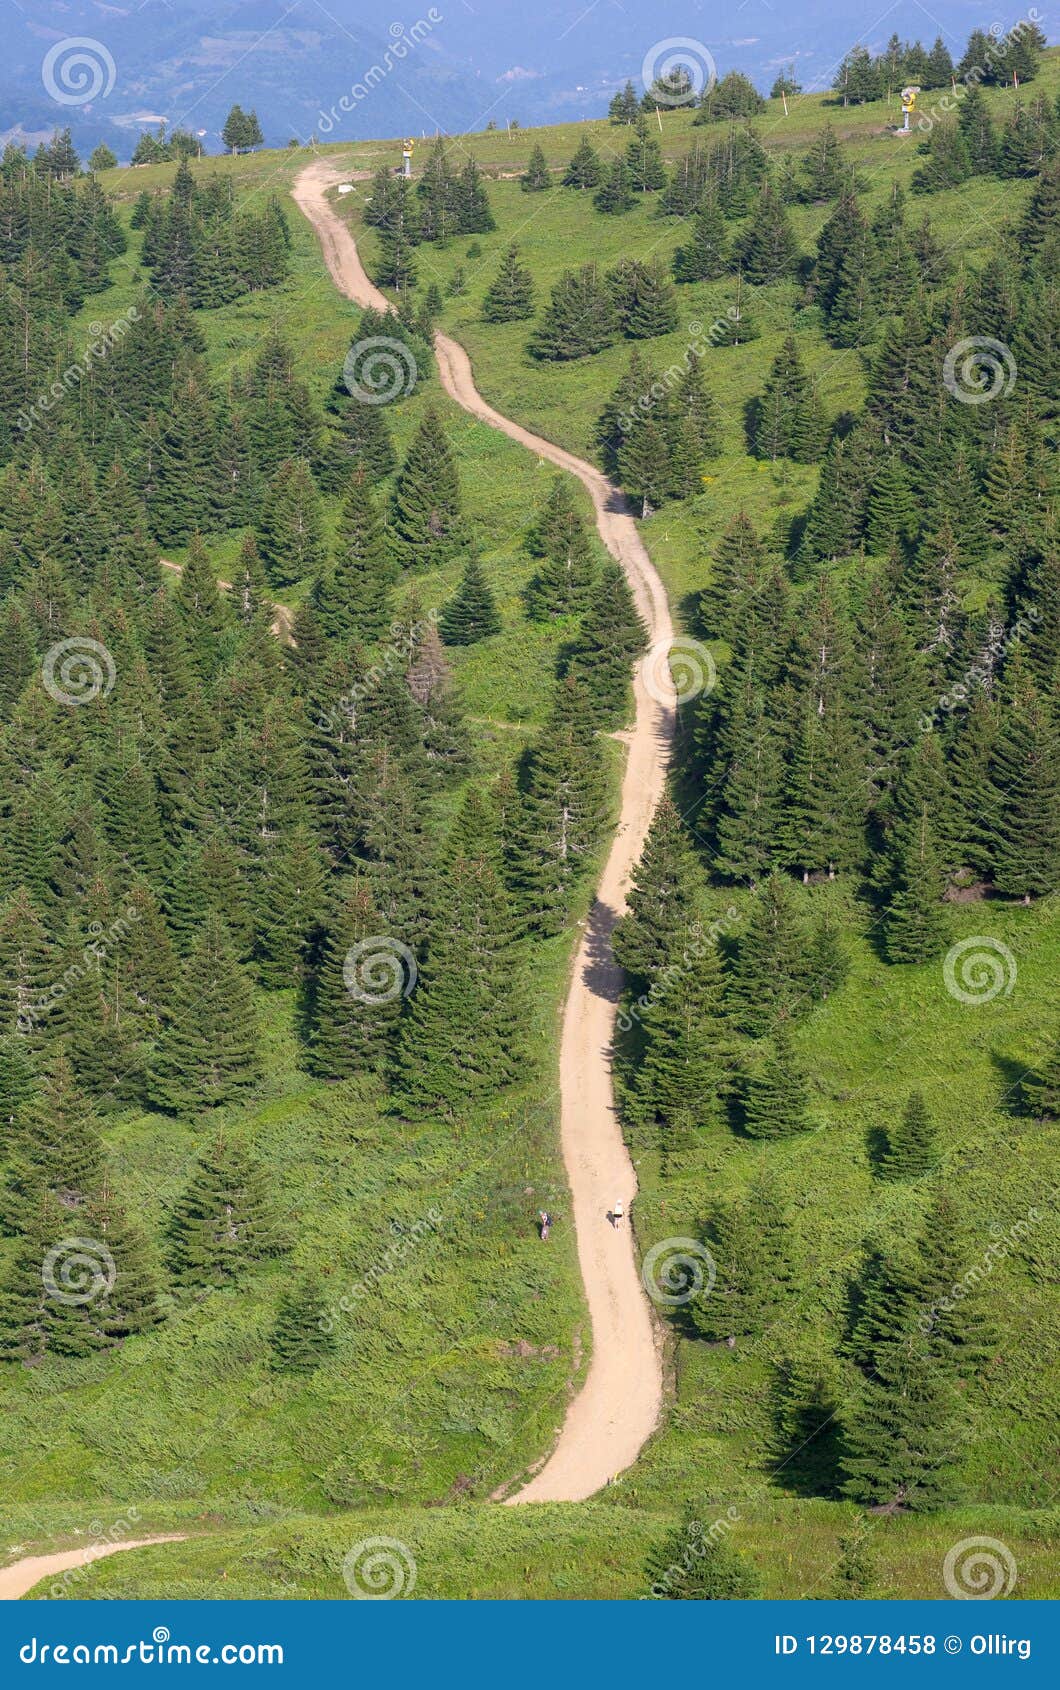 fir woods of kopaonik national park, serbia